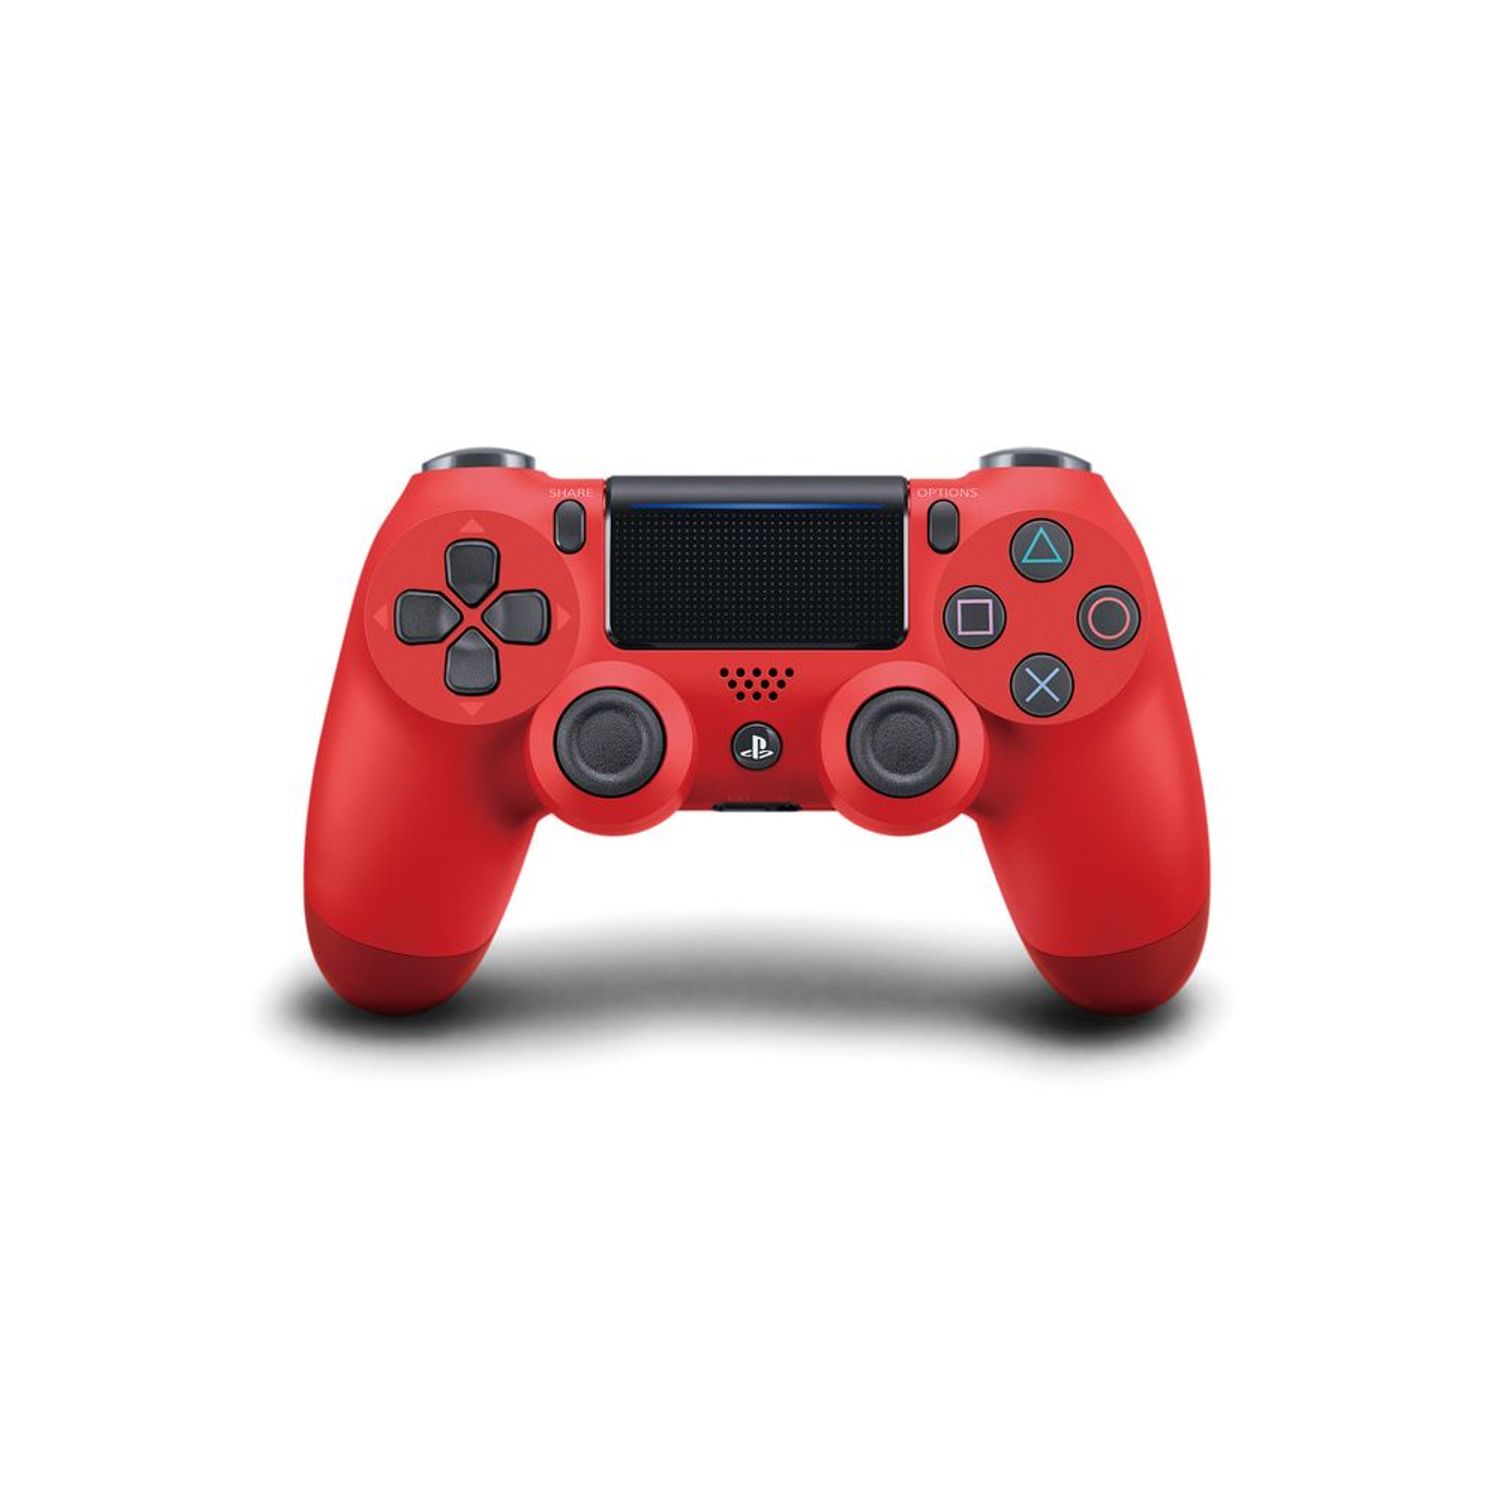 Mando PS4 Sony Nuevo V2 Rojo I Oechsle - Oechsle